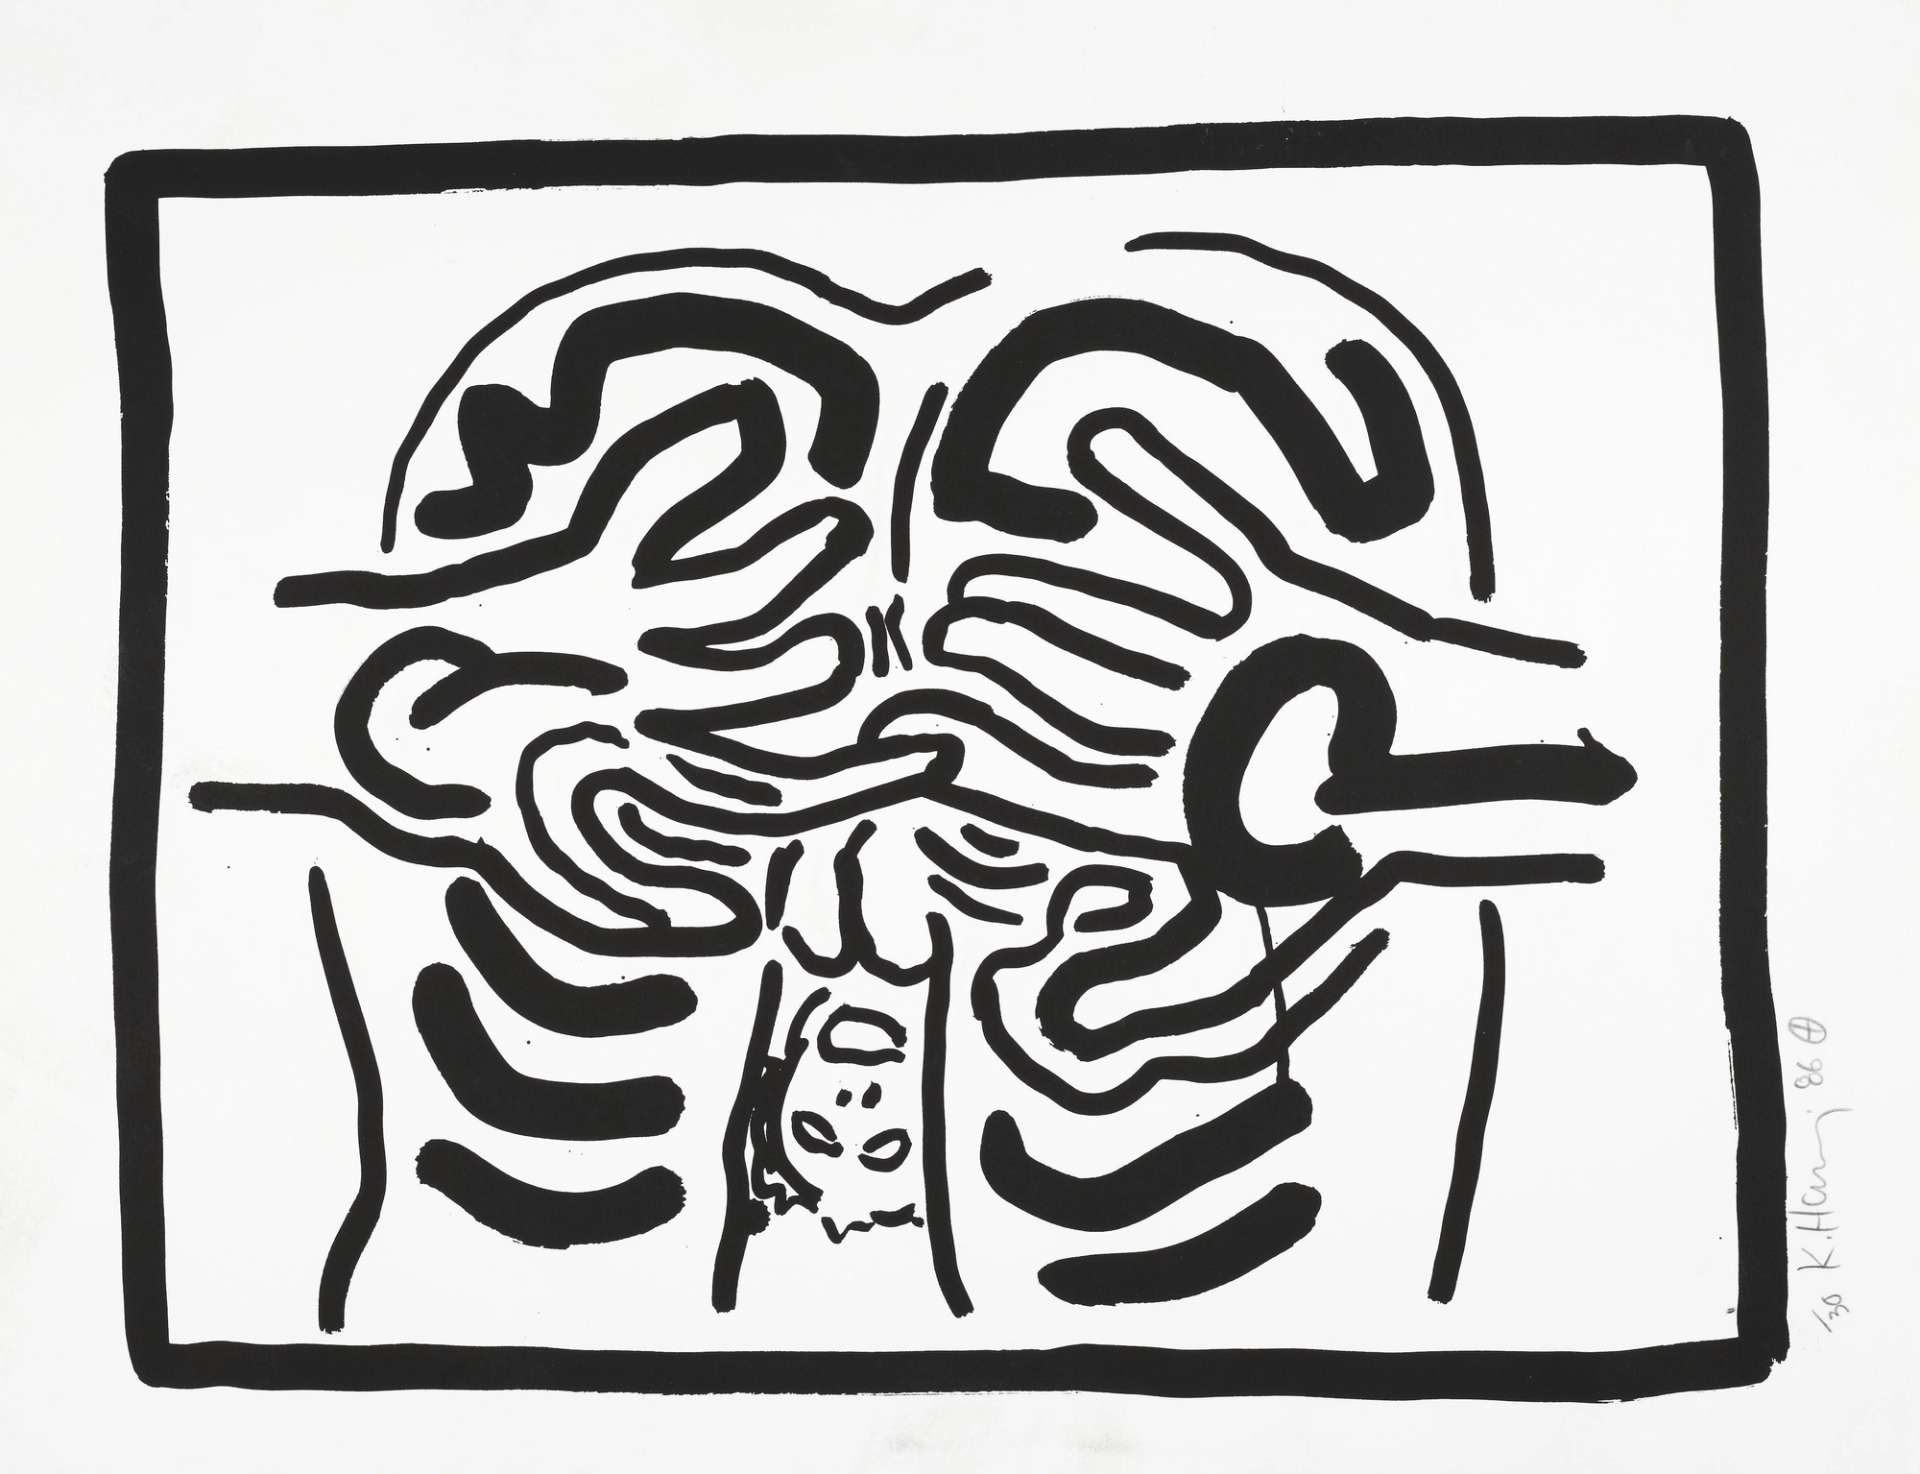 Bad Boys 4 - Signed Print by Keith Haring 1986 - MyArtBroker